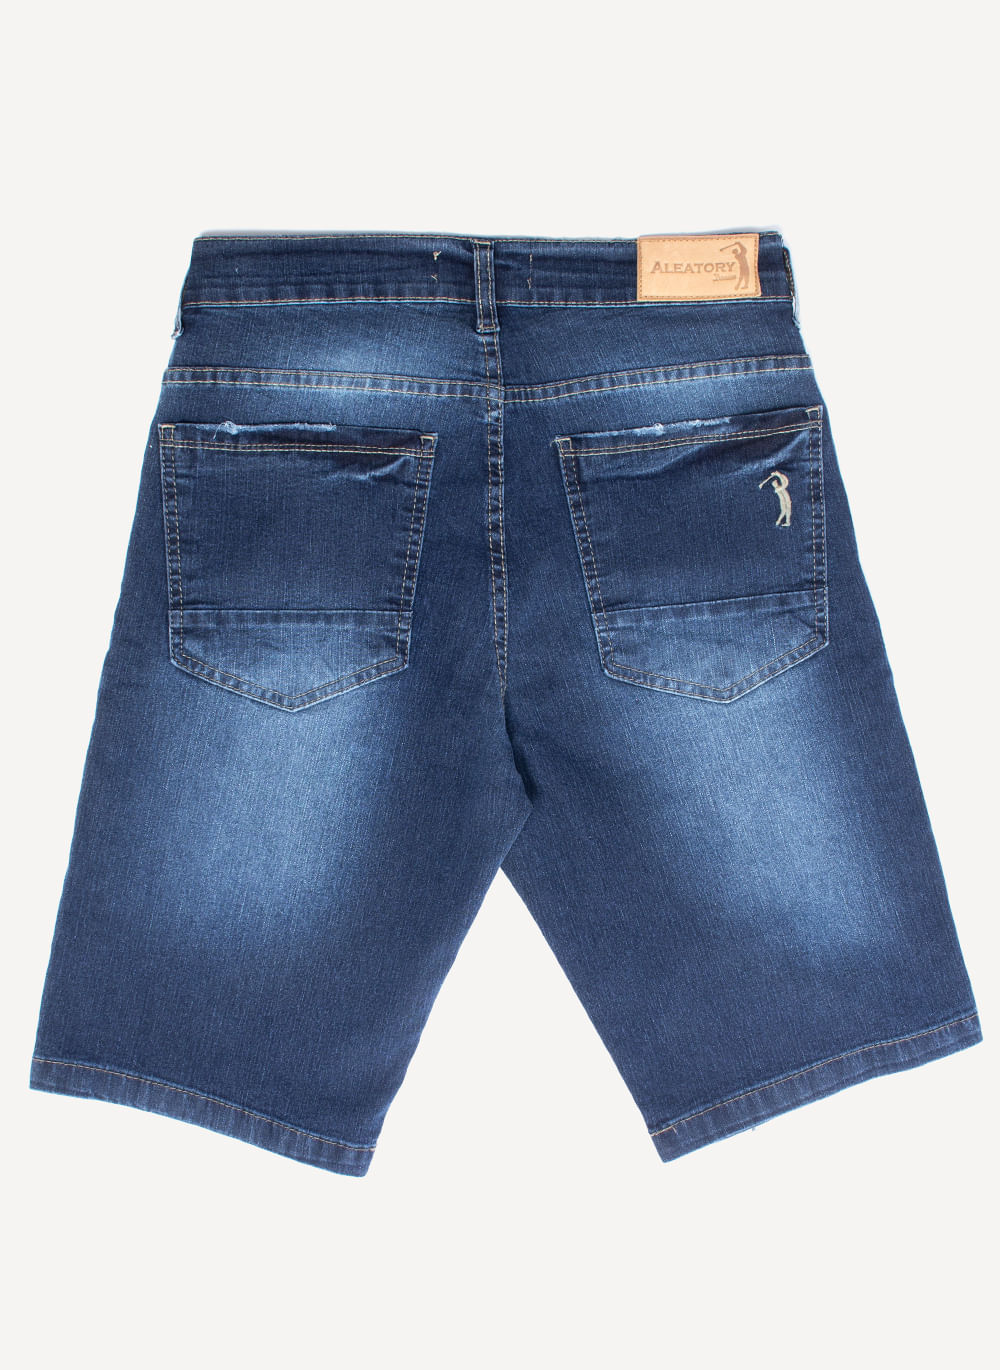 Bermuda-Jeans-Aleatory-Better-Azul-38